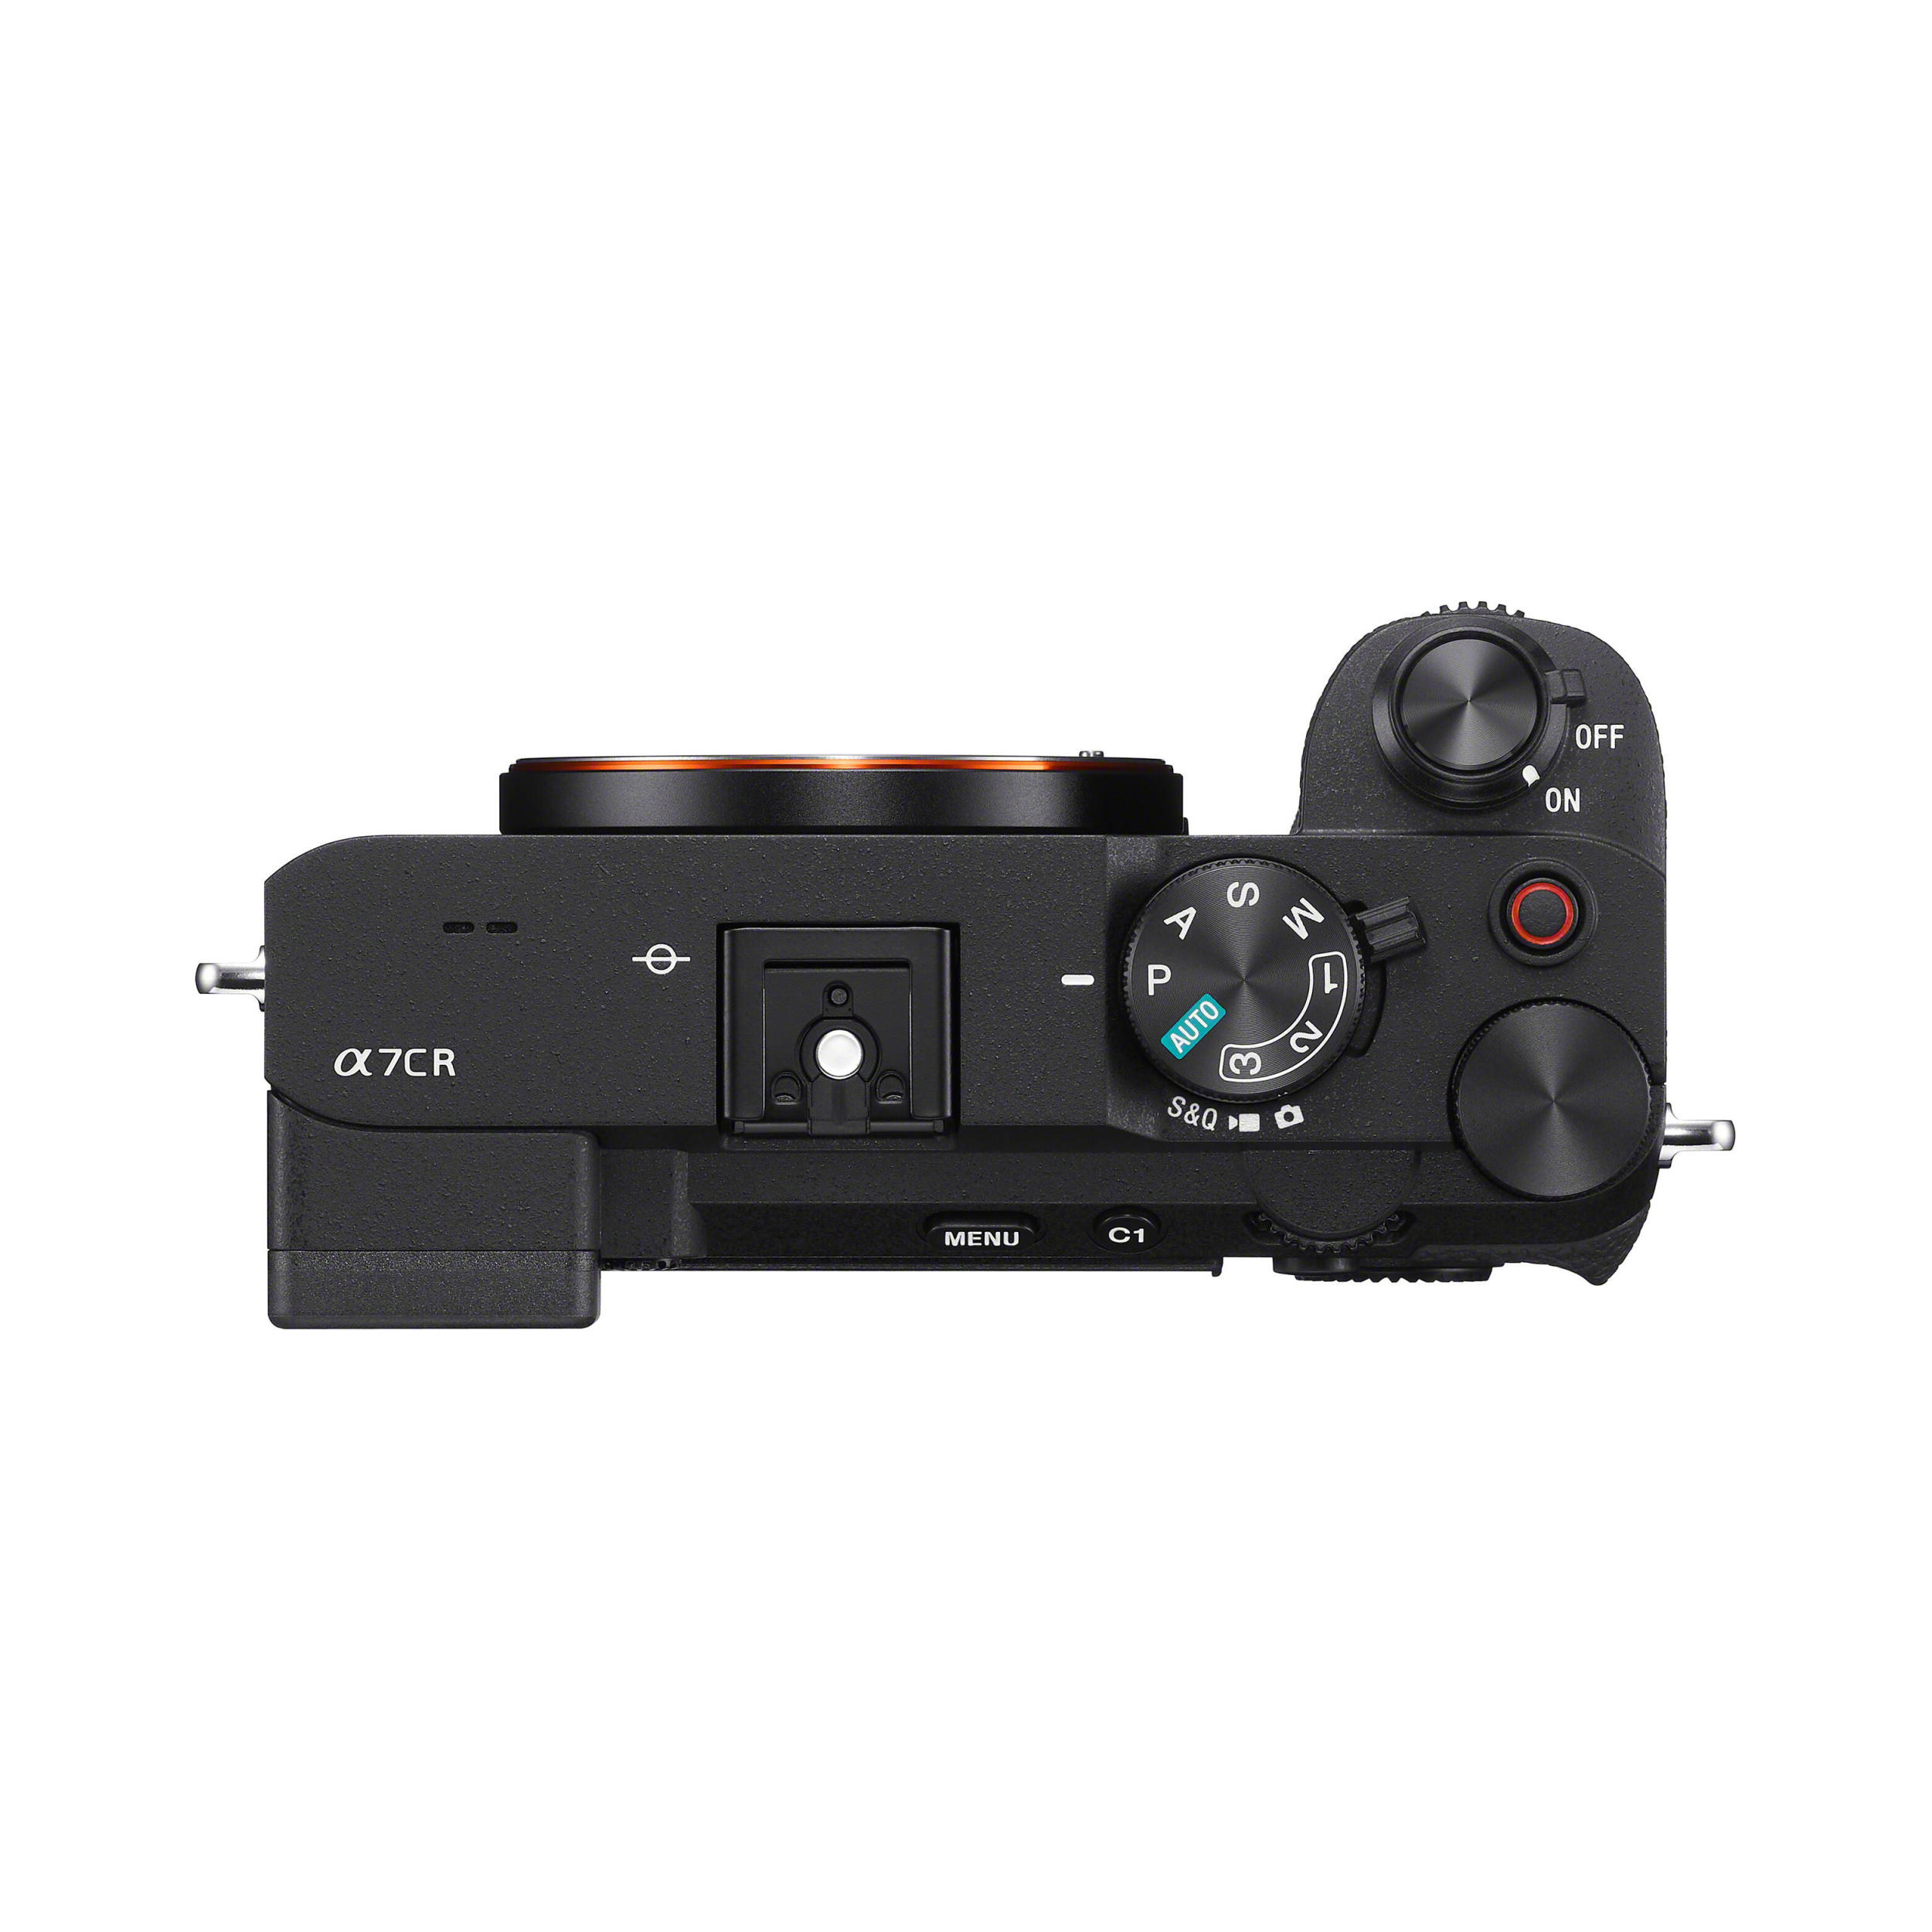 Caméra sans miroir Sony A7cr - noir